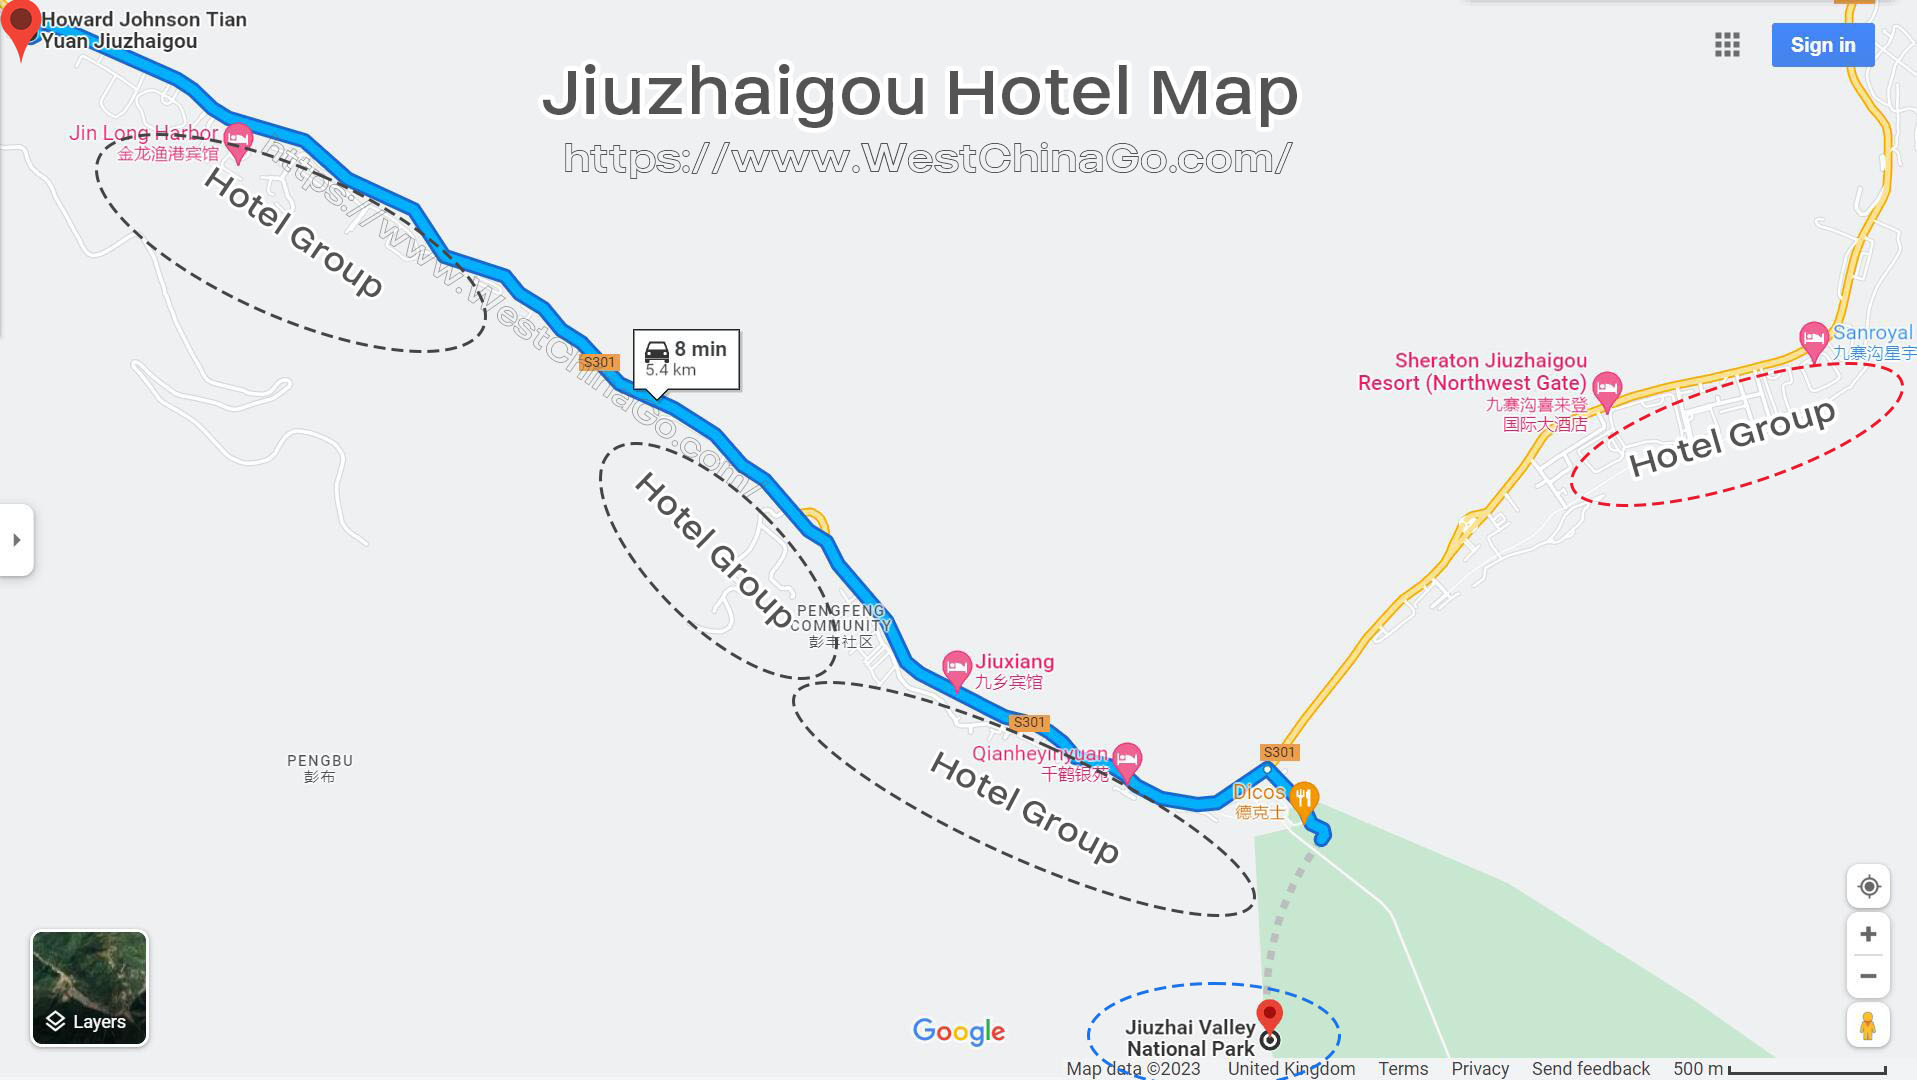 jiuzhaigou hotel map